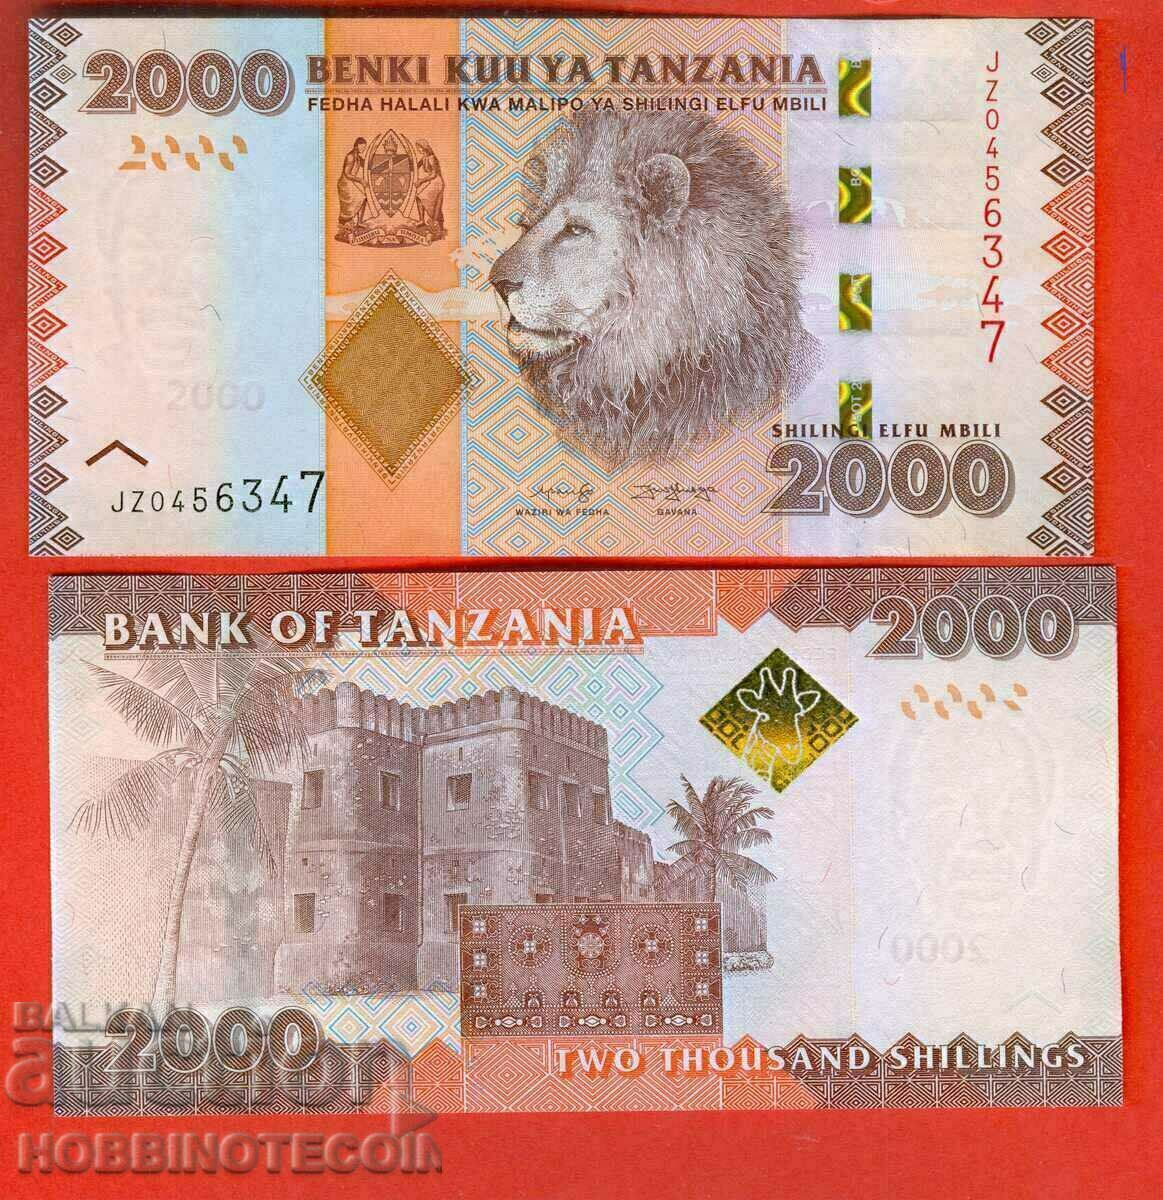 TANZANIA TANZANIA 2000 Emisiune de Shilling - emisiune 2020 NOU UNC